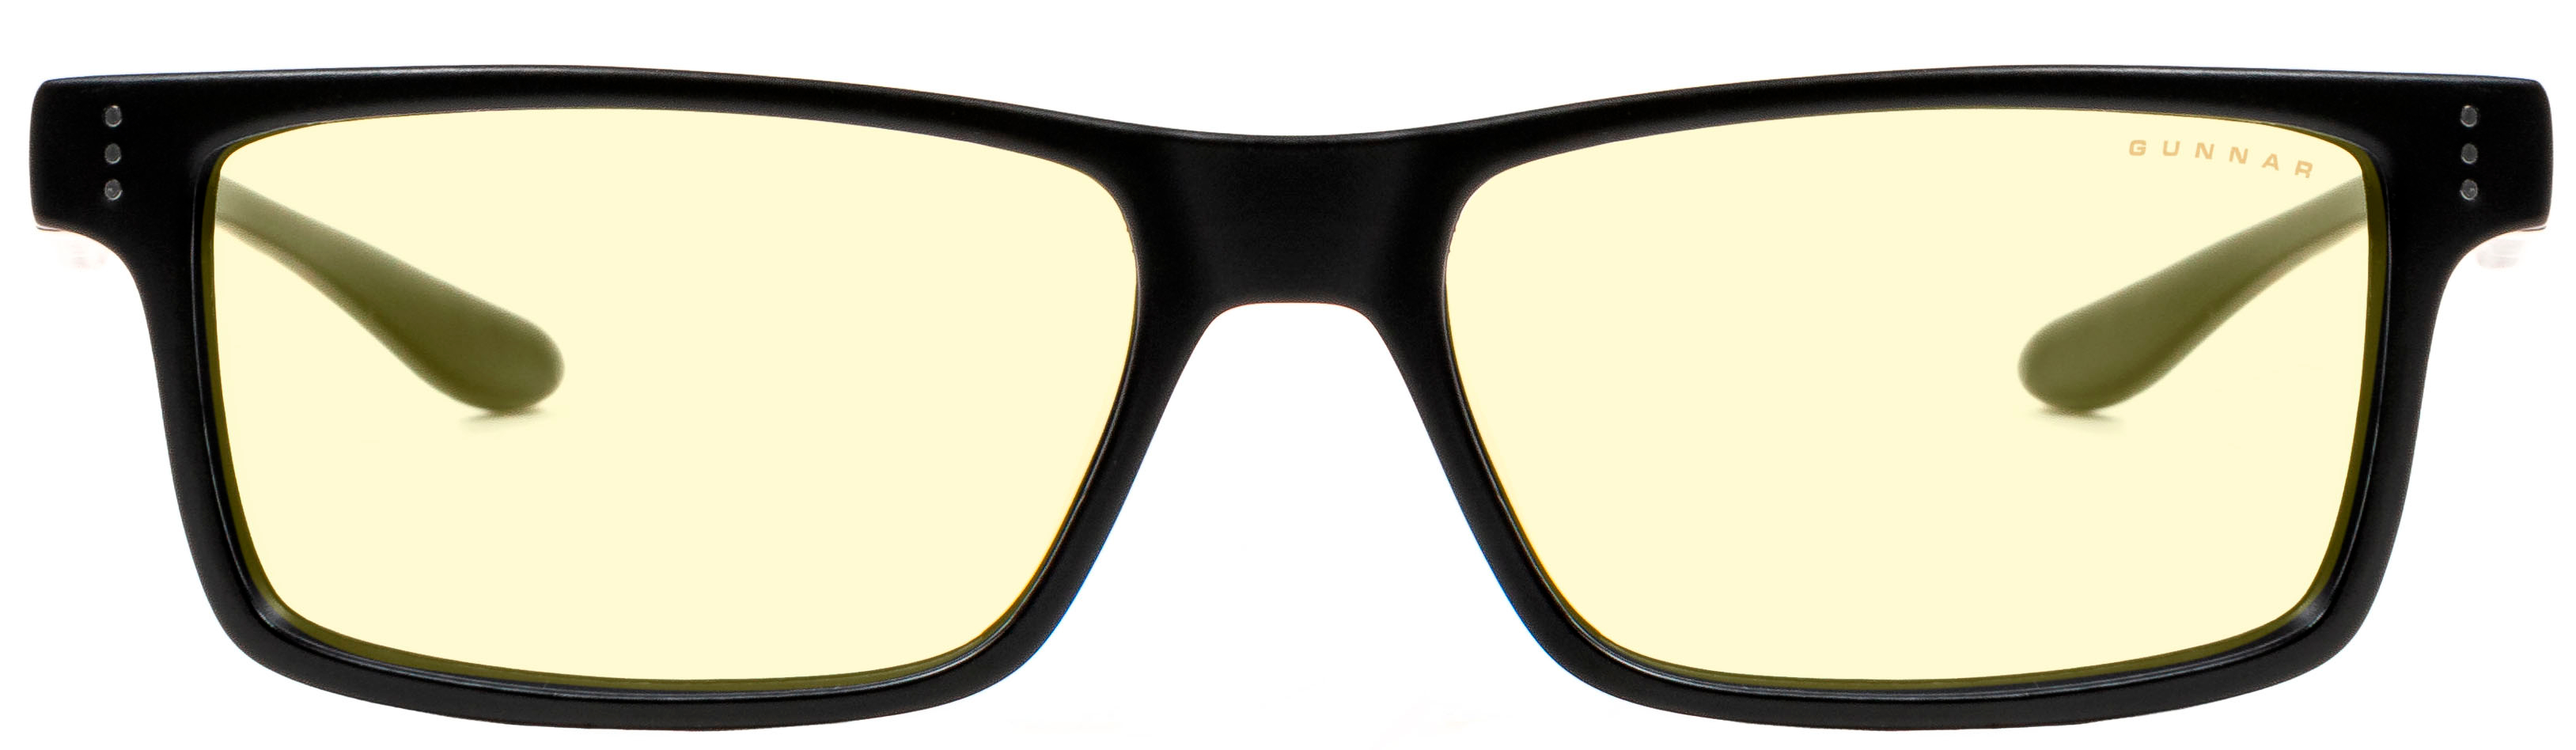 Angle View: GUNNAR - Blue Light Reading Glasses - Vertex +1.5 - Onyx